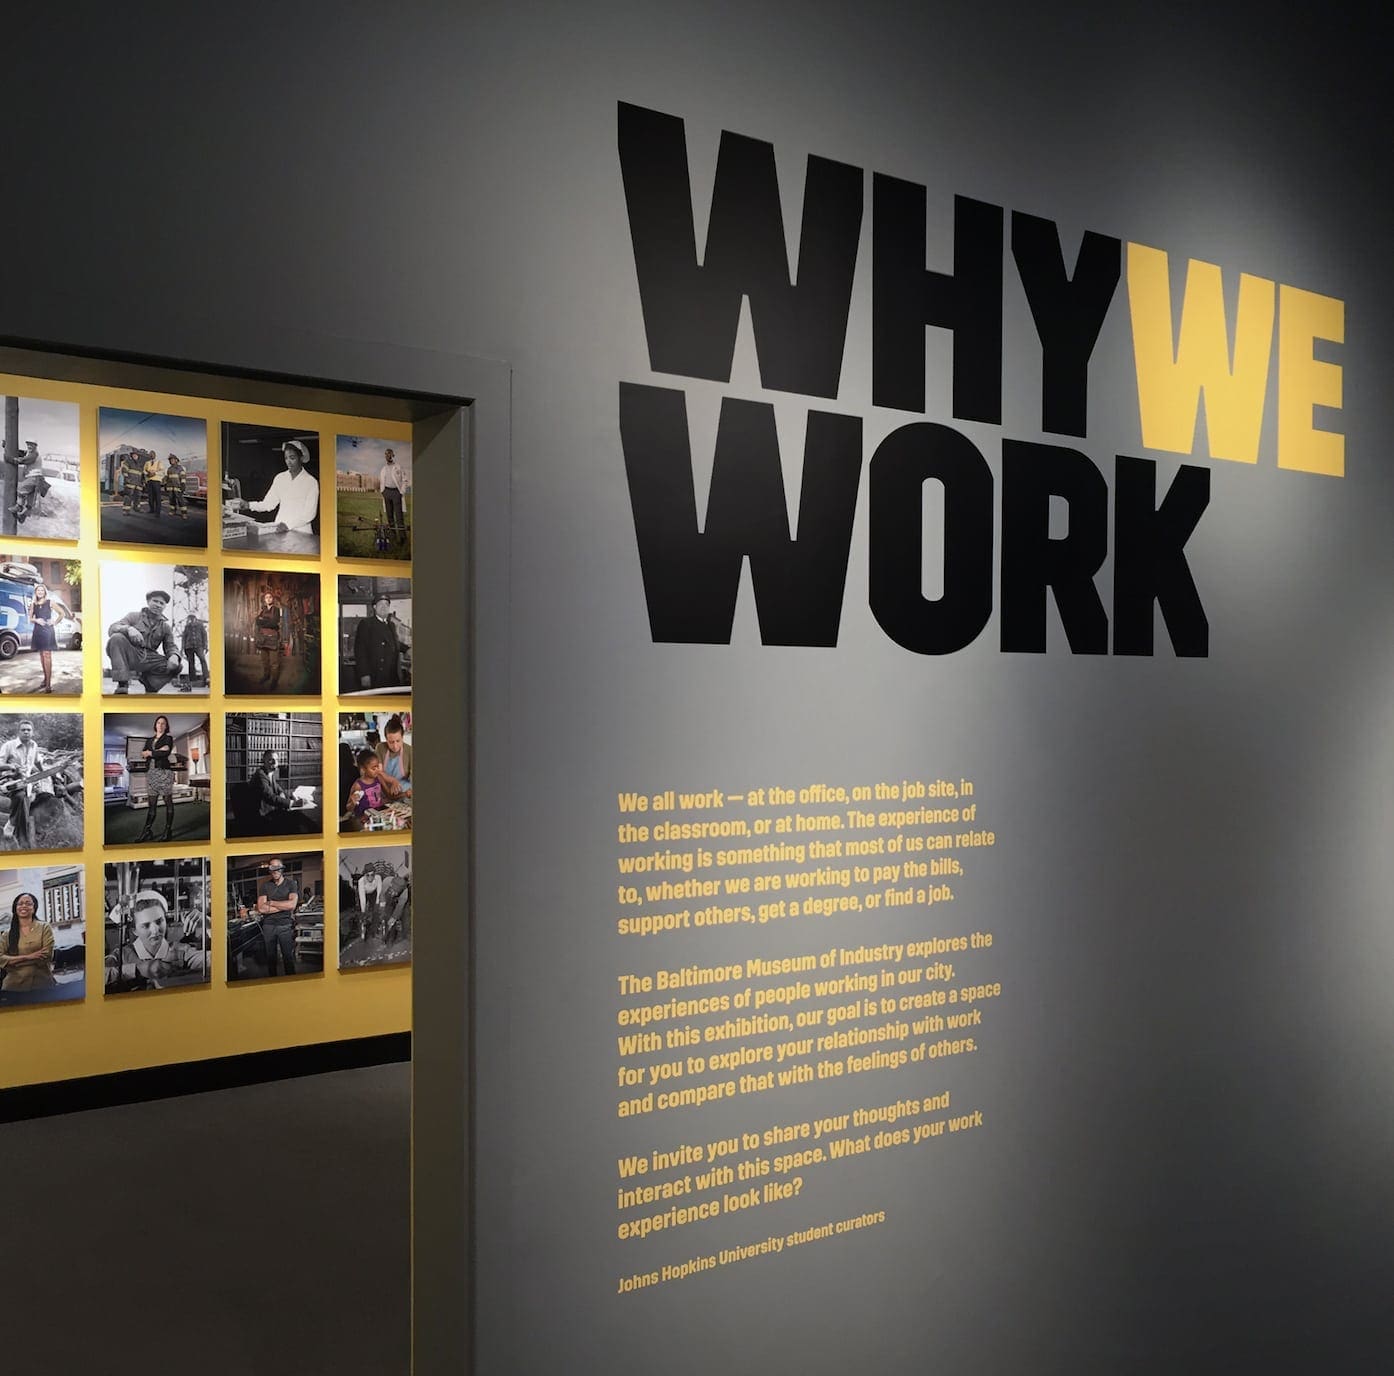 Why We Work exhibit